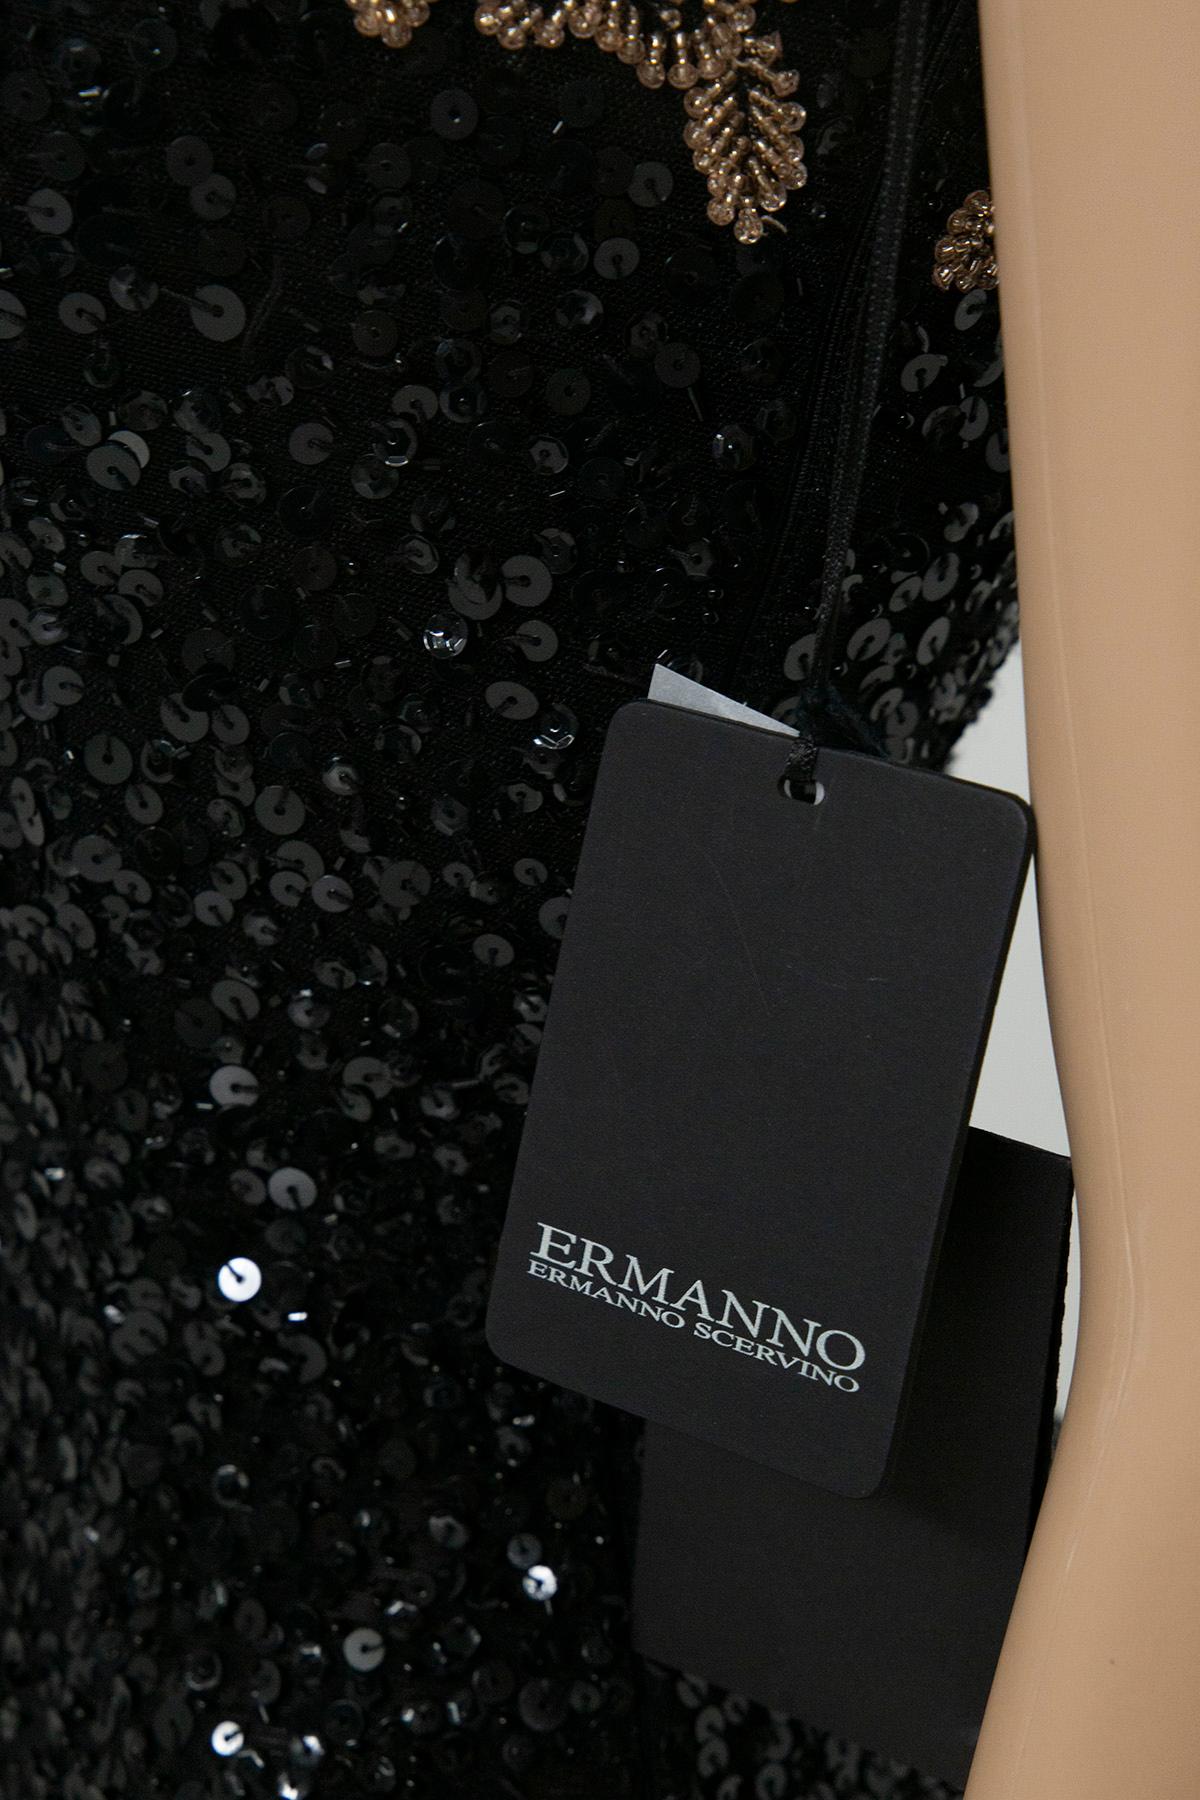 Ermanno Scervino black and gold sequined evening dress For Sale 3